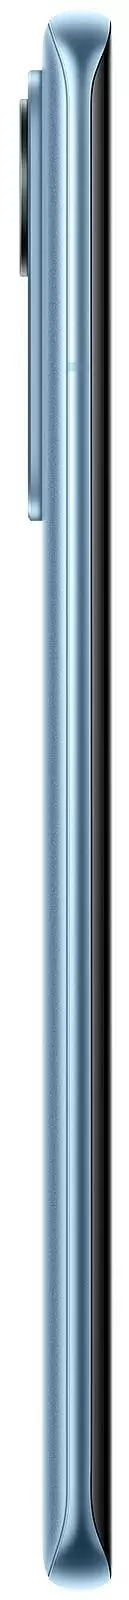 Смартфон Xiaomi 12 Pro 12/256ГБ, голубой